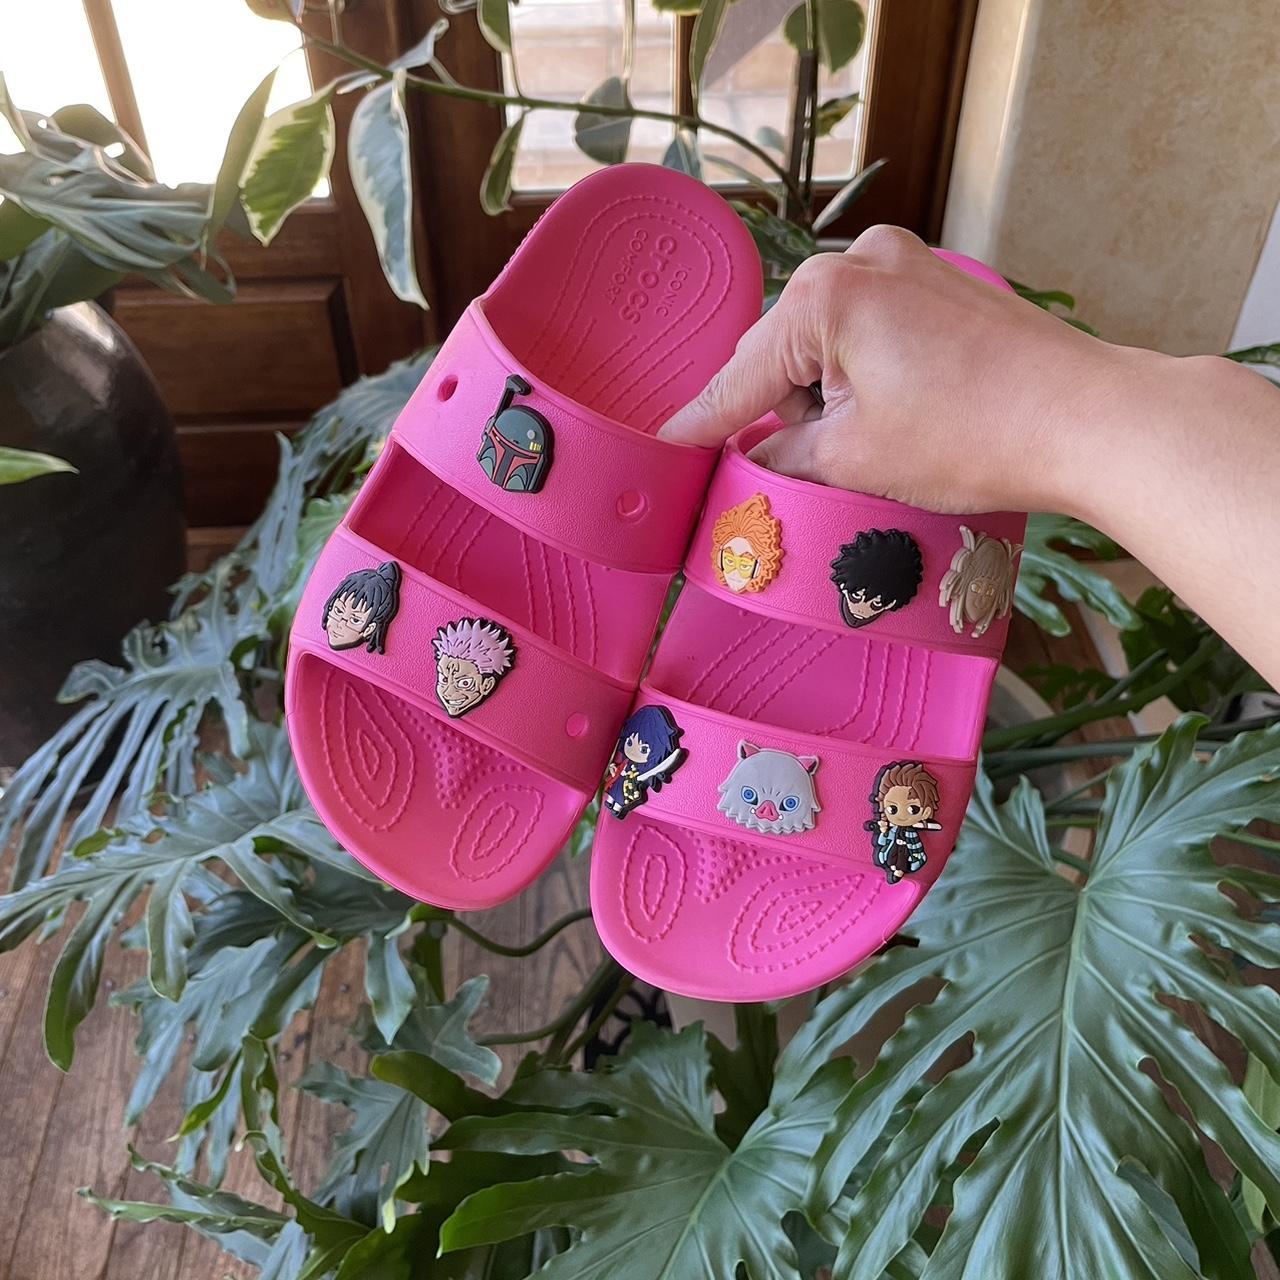 Jibbitz for crocs shoes | sandals | slippers | flip flops | CHANEL